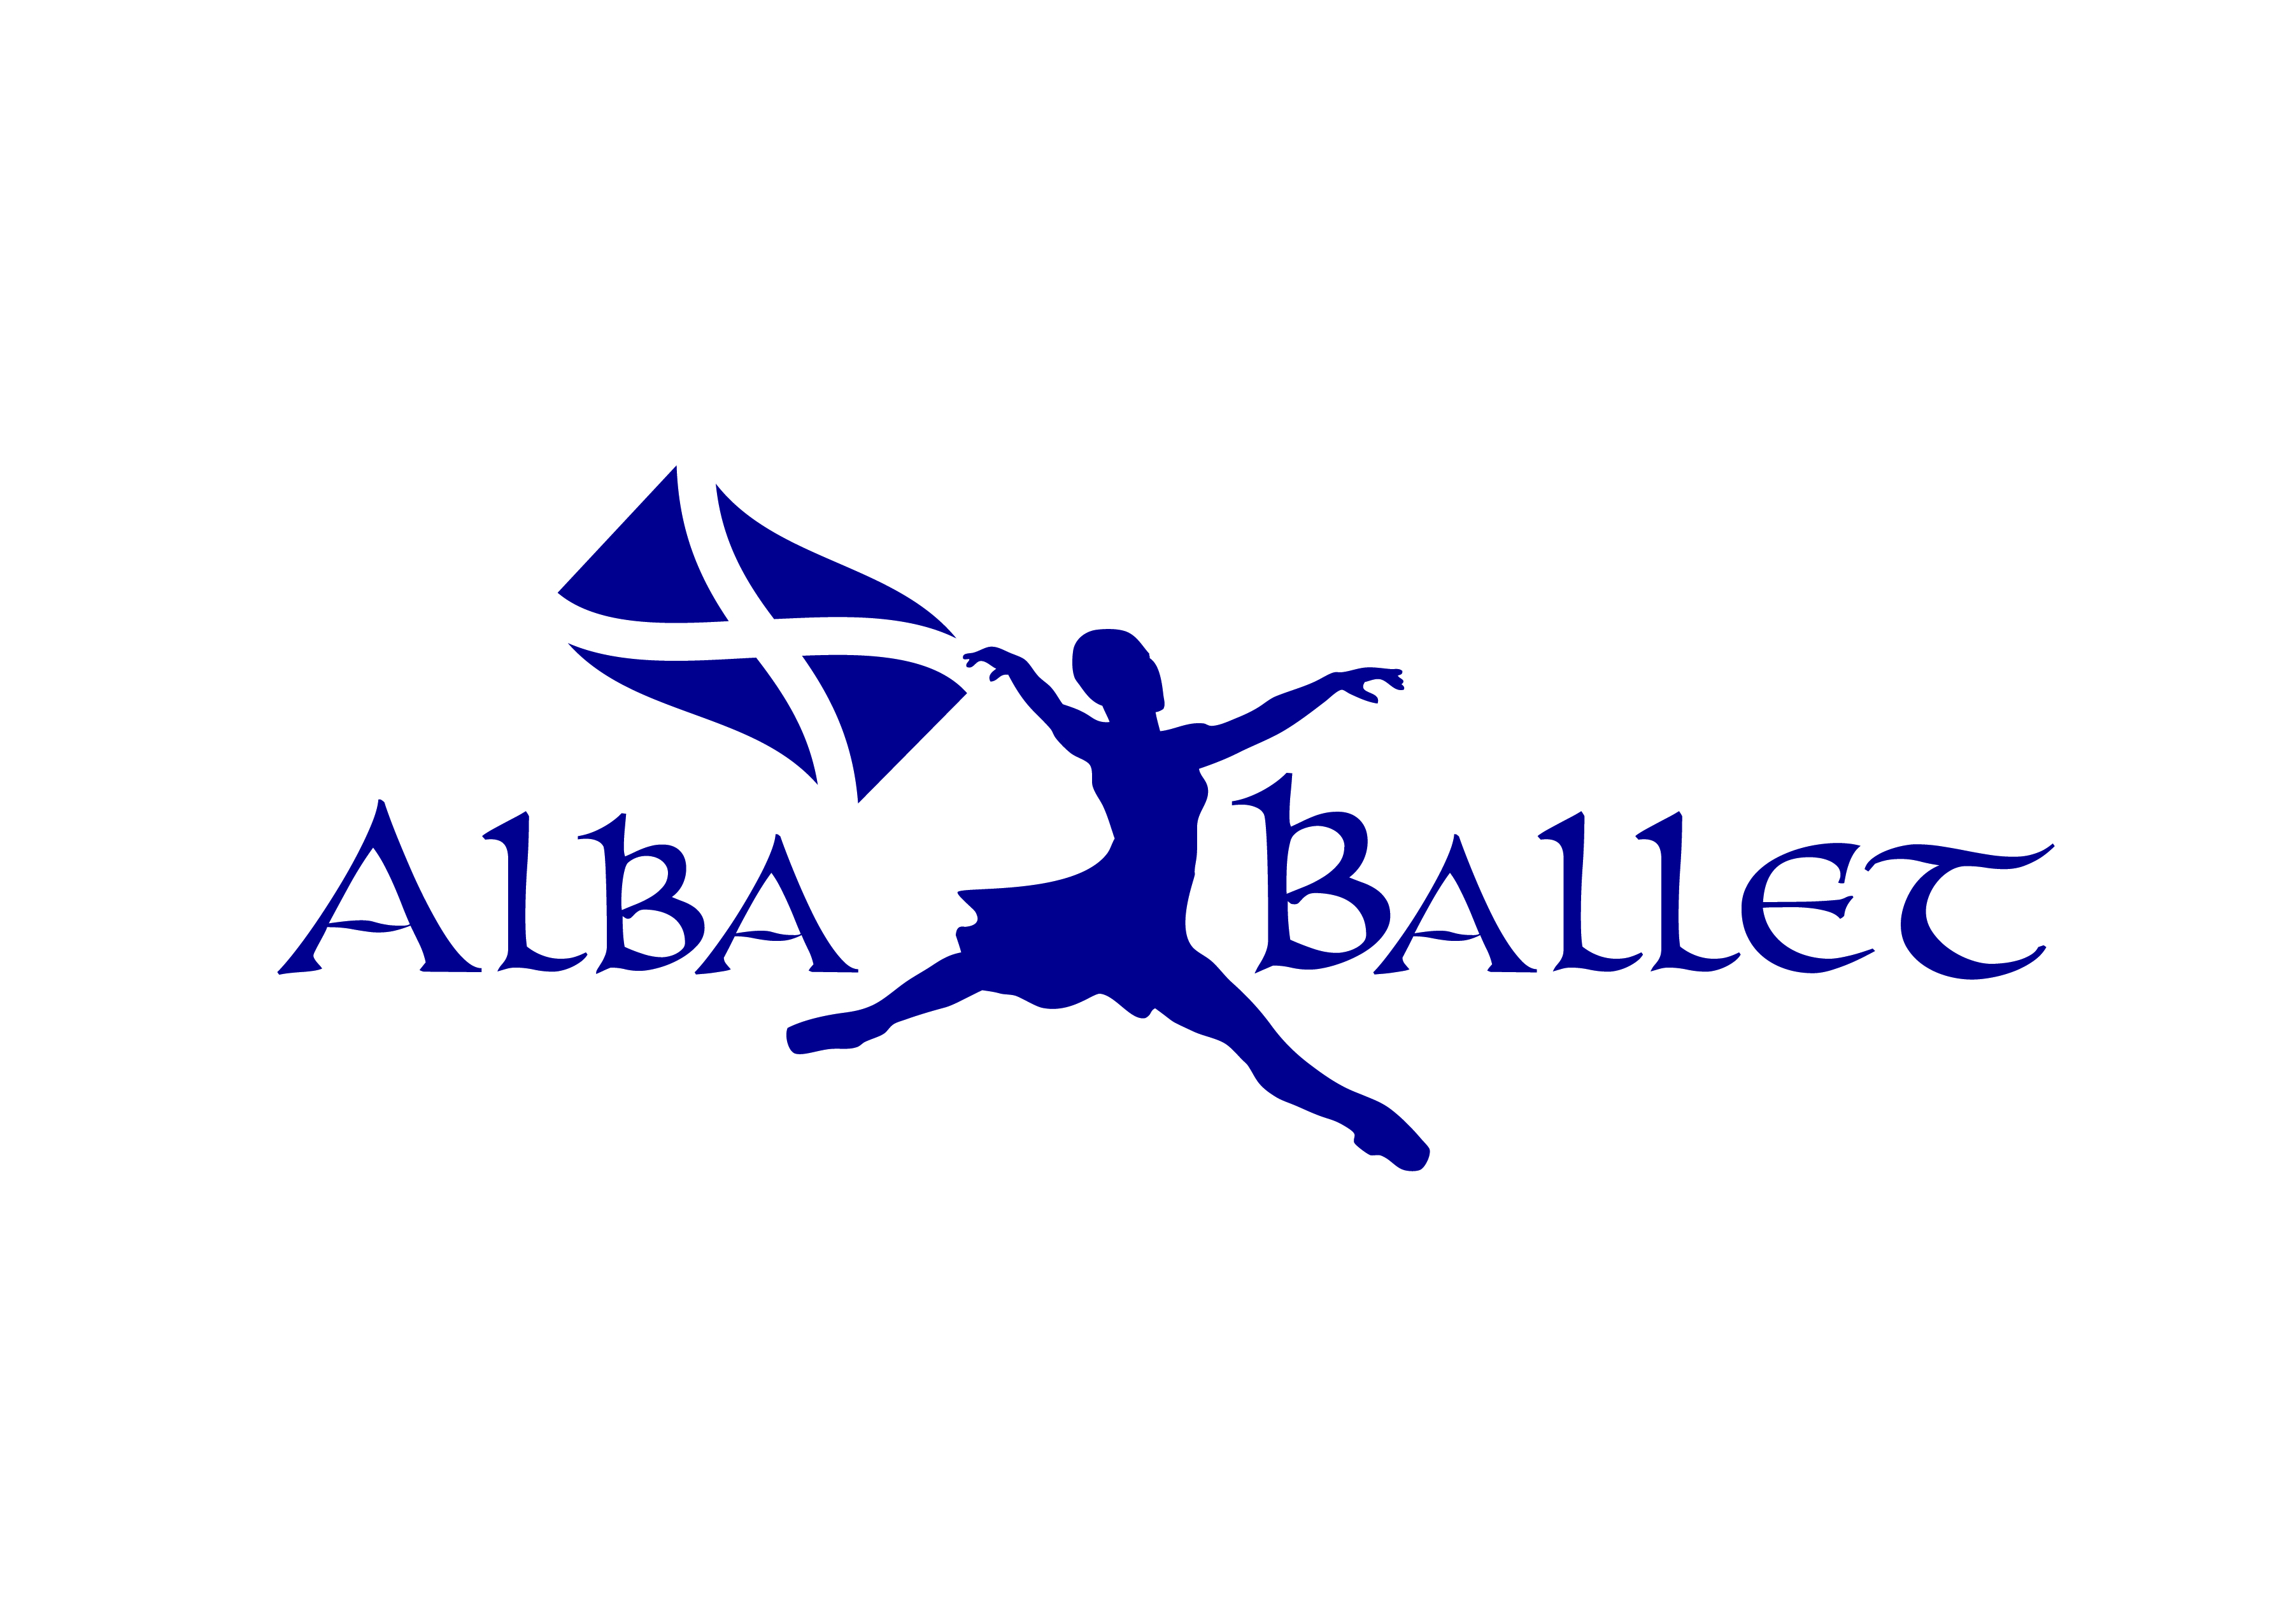 The Alba Academy School of Ballet